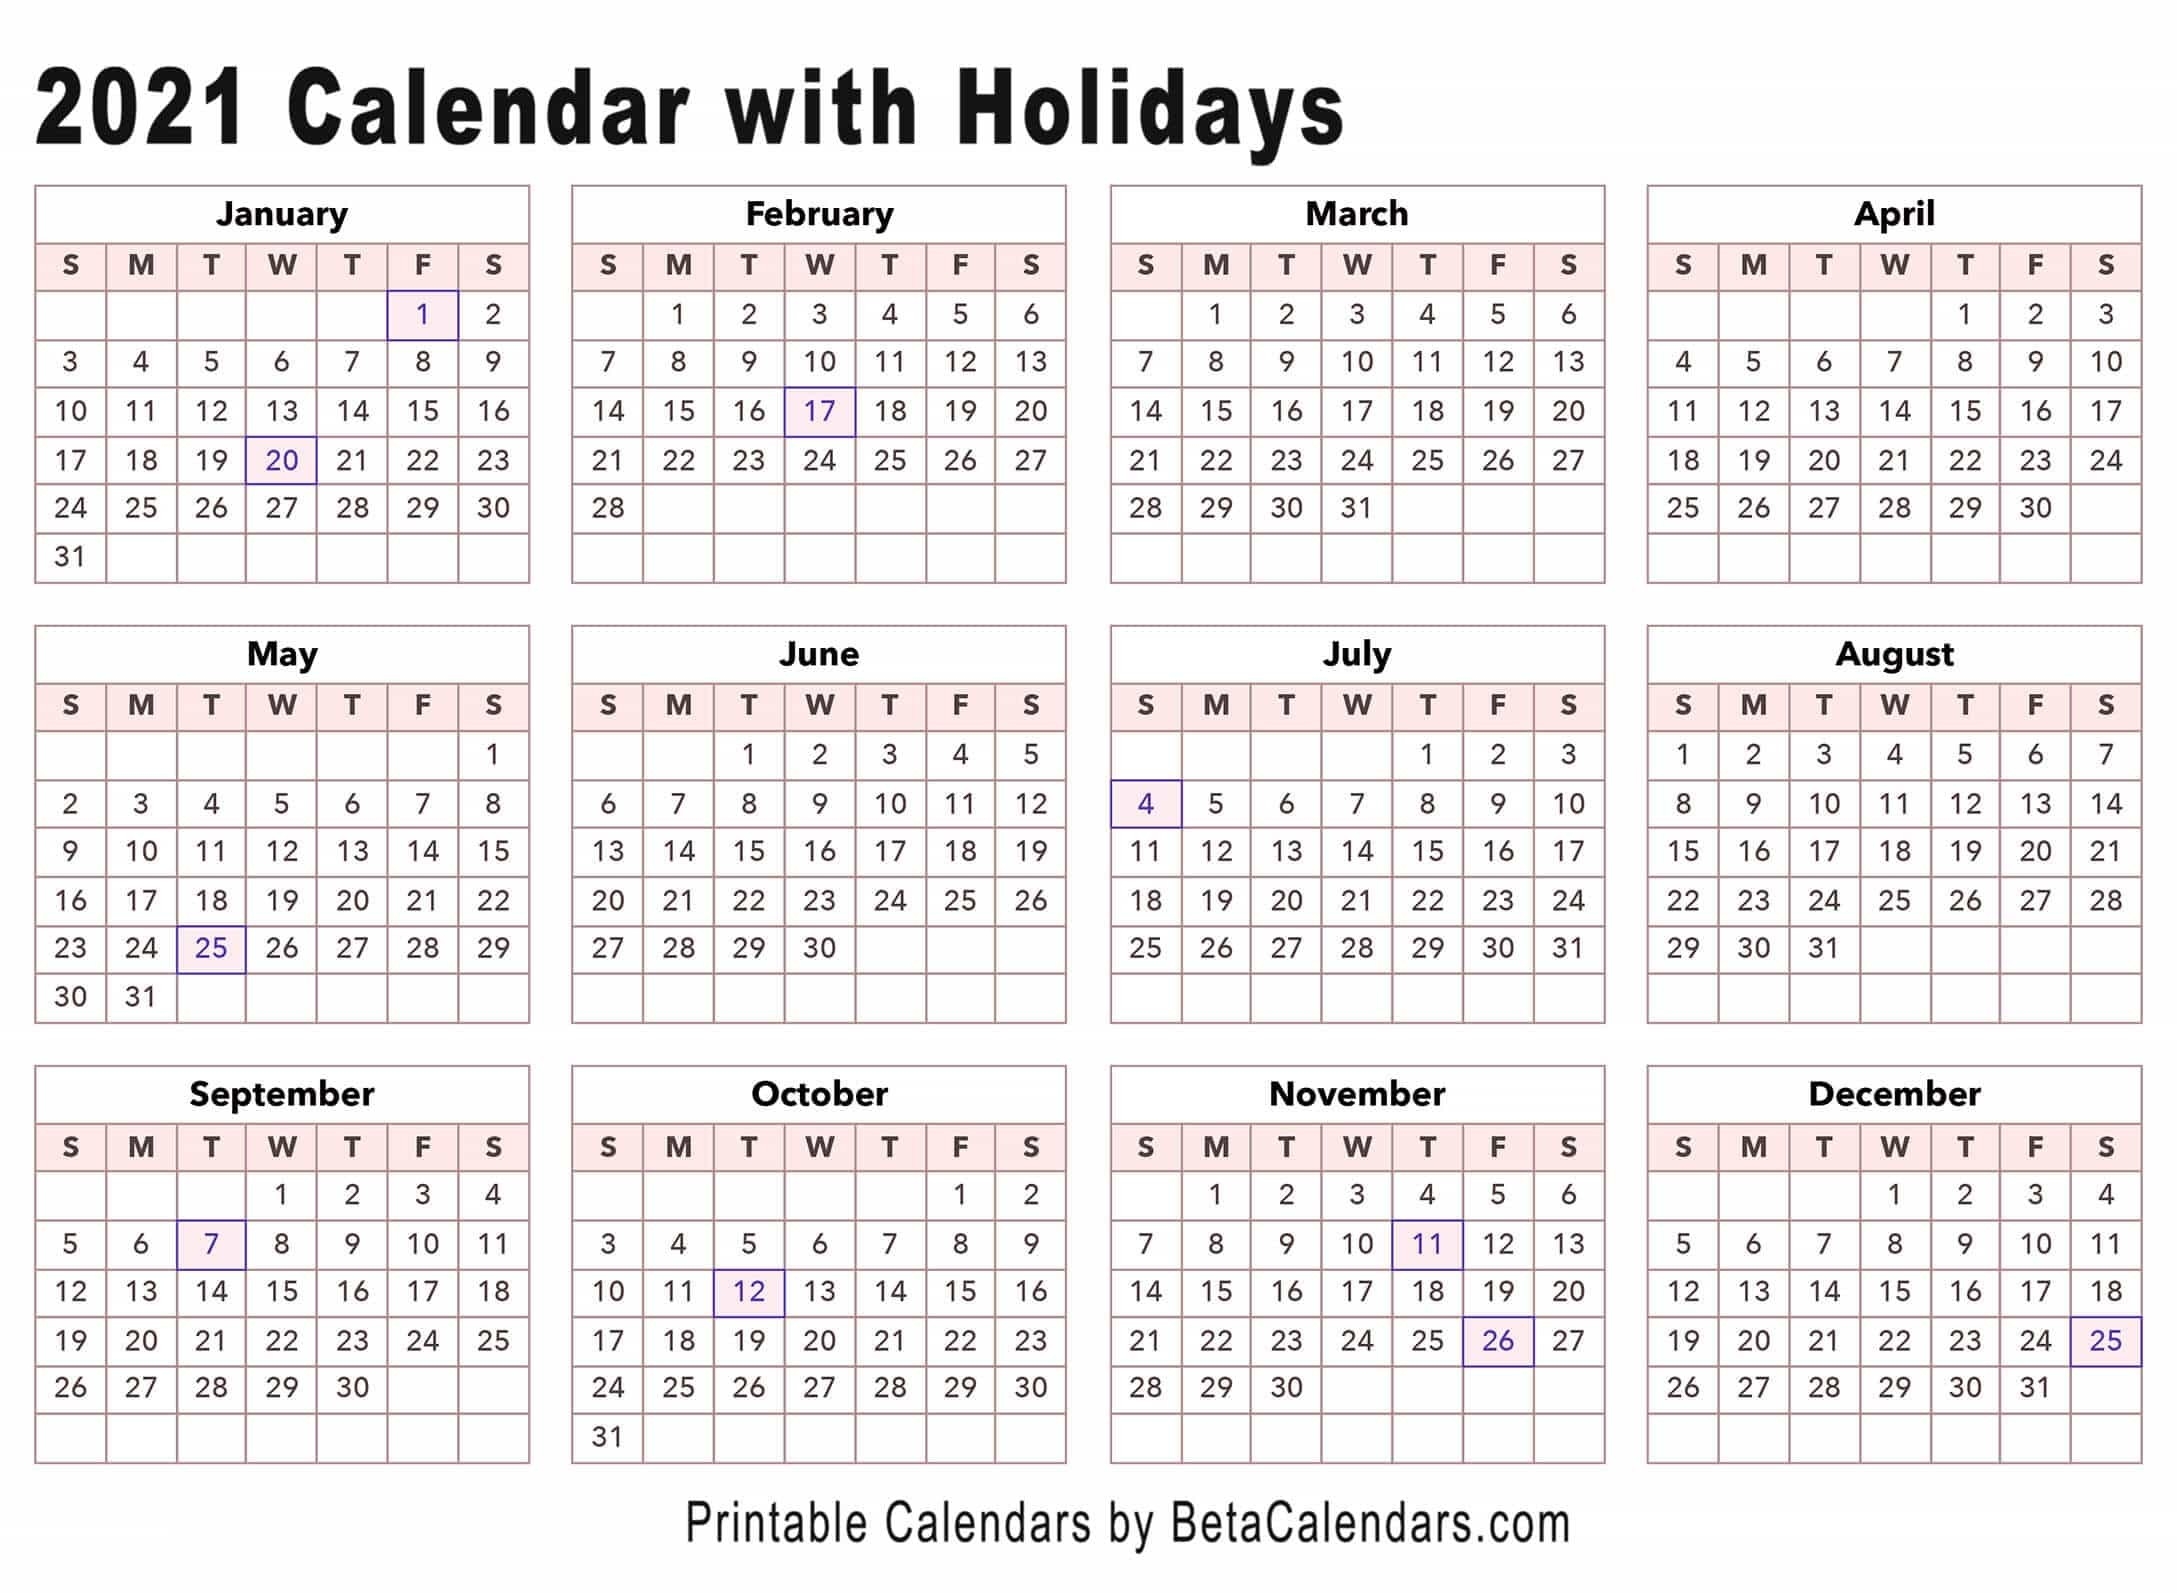 2021 Calendar - Beta Calendars-2021 Calendar With Holidays Listed